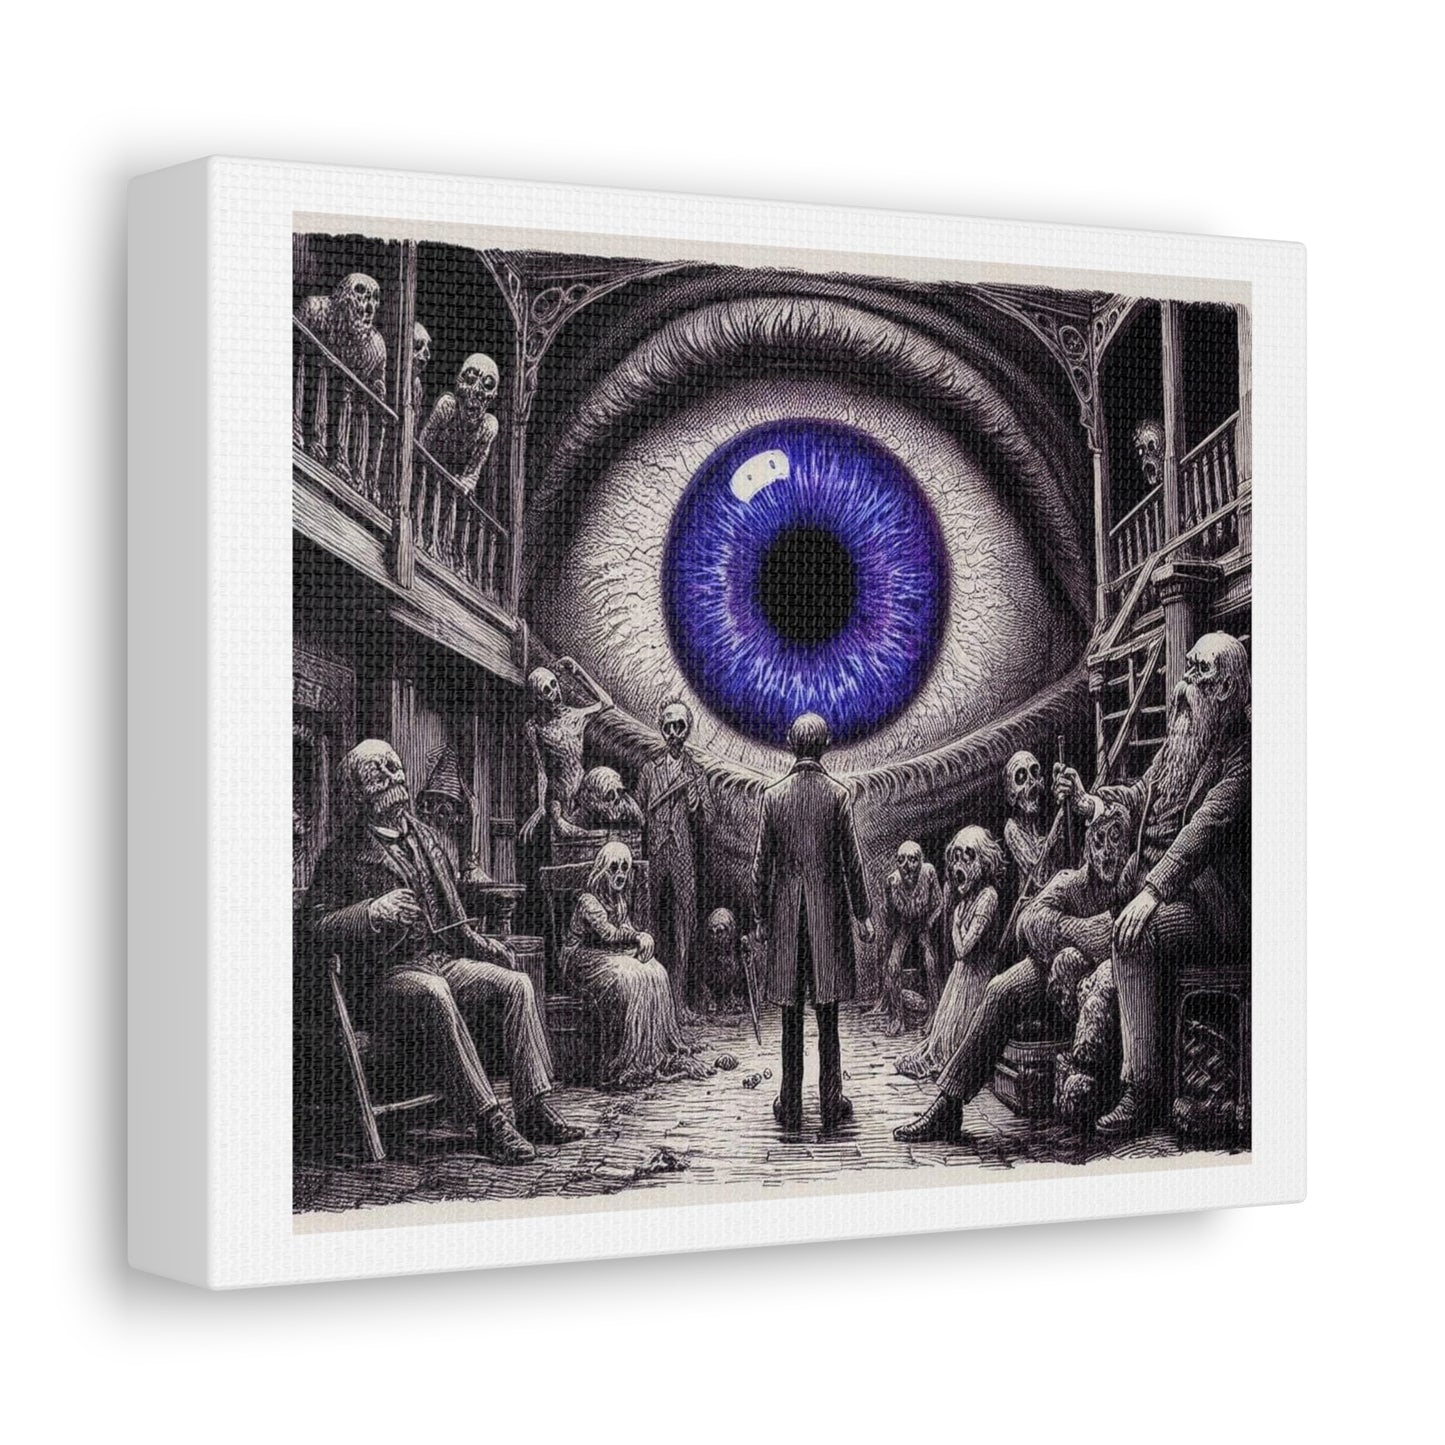 Giant Eye to Represent Indigo Eternity, Art Print 'Designed by AI' on Canvas